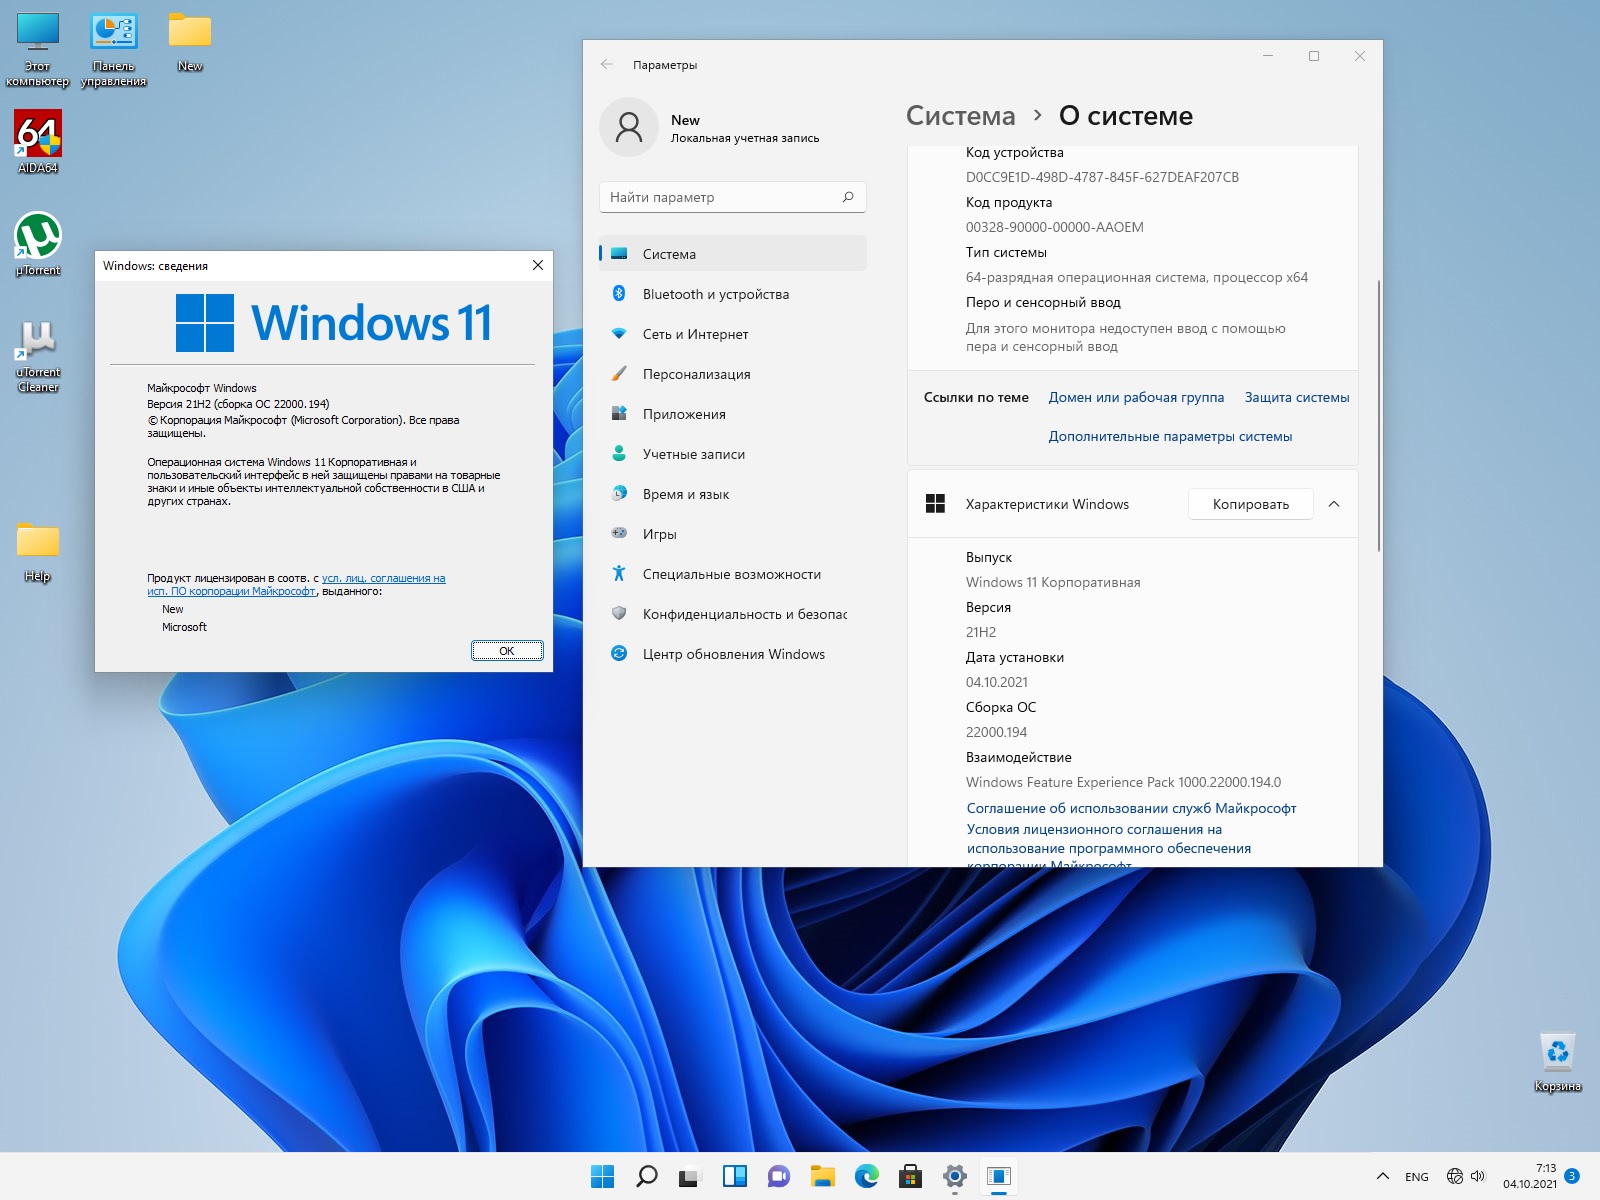 Windows 11x64 Enterprise 21H2 22000.194 v.73.21